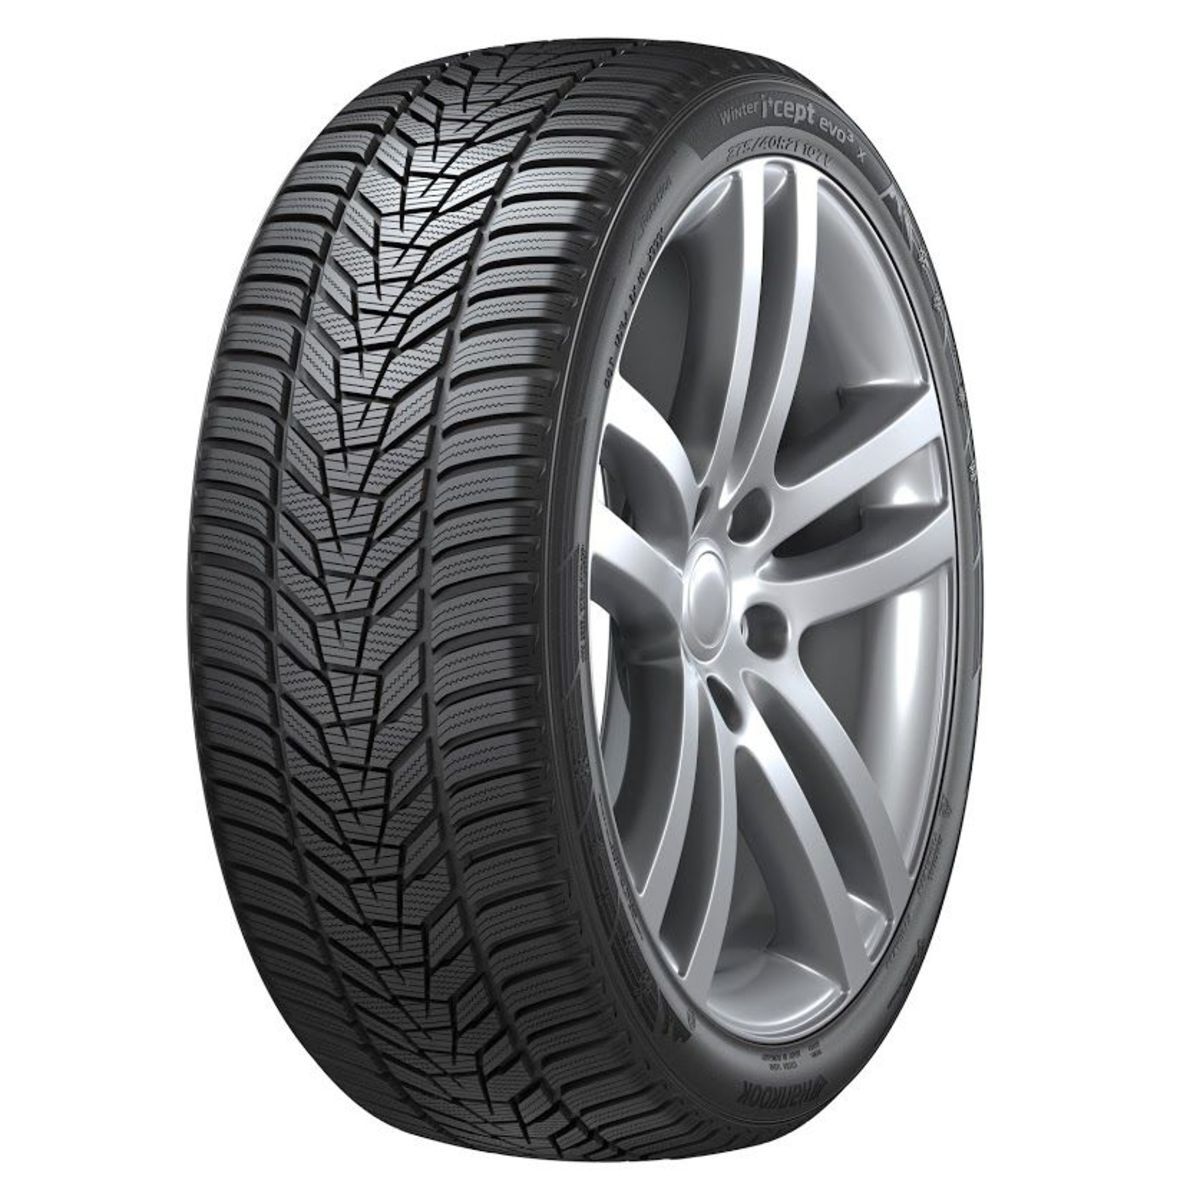 Neumáticos de invierno HANKOOK Winter i*cept evo3 X W330A 215/65R17 99V